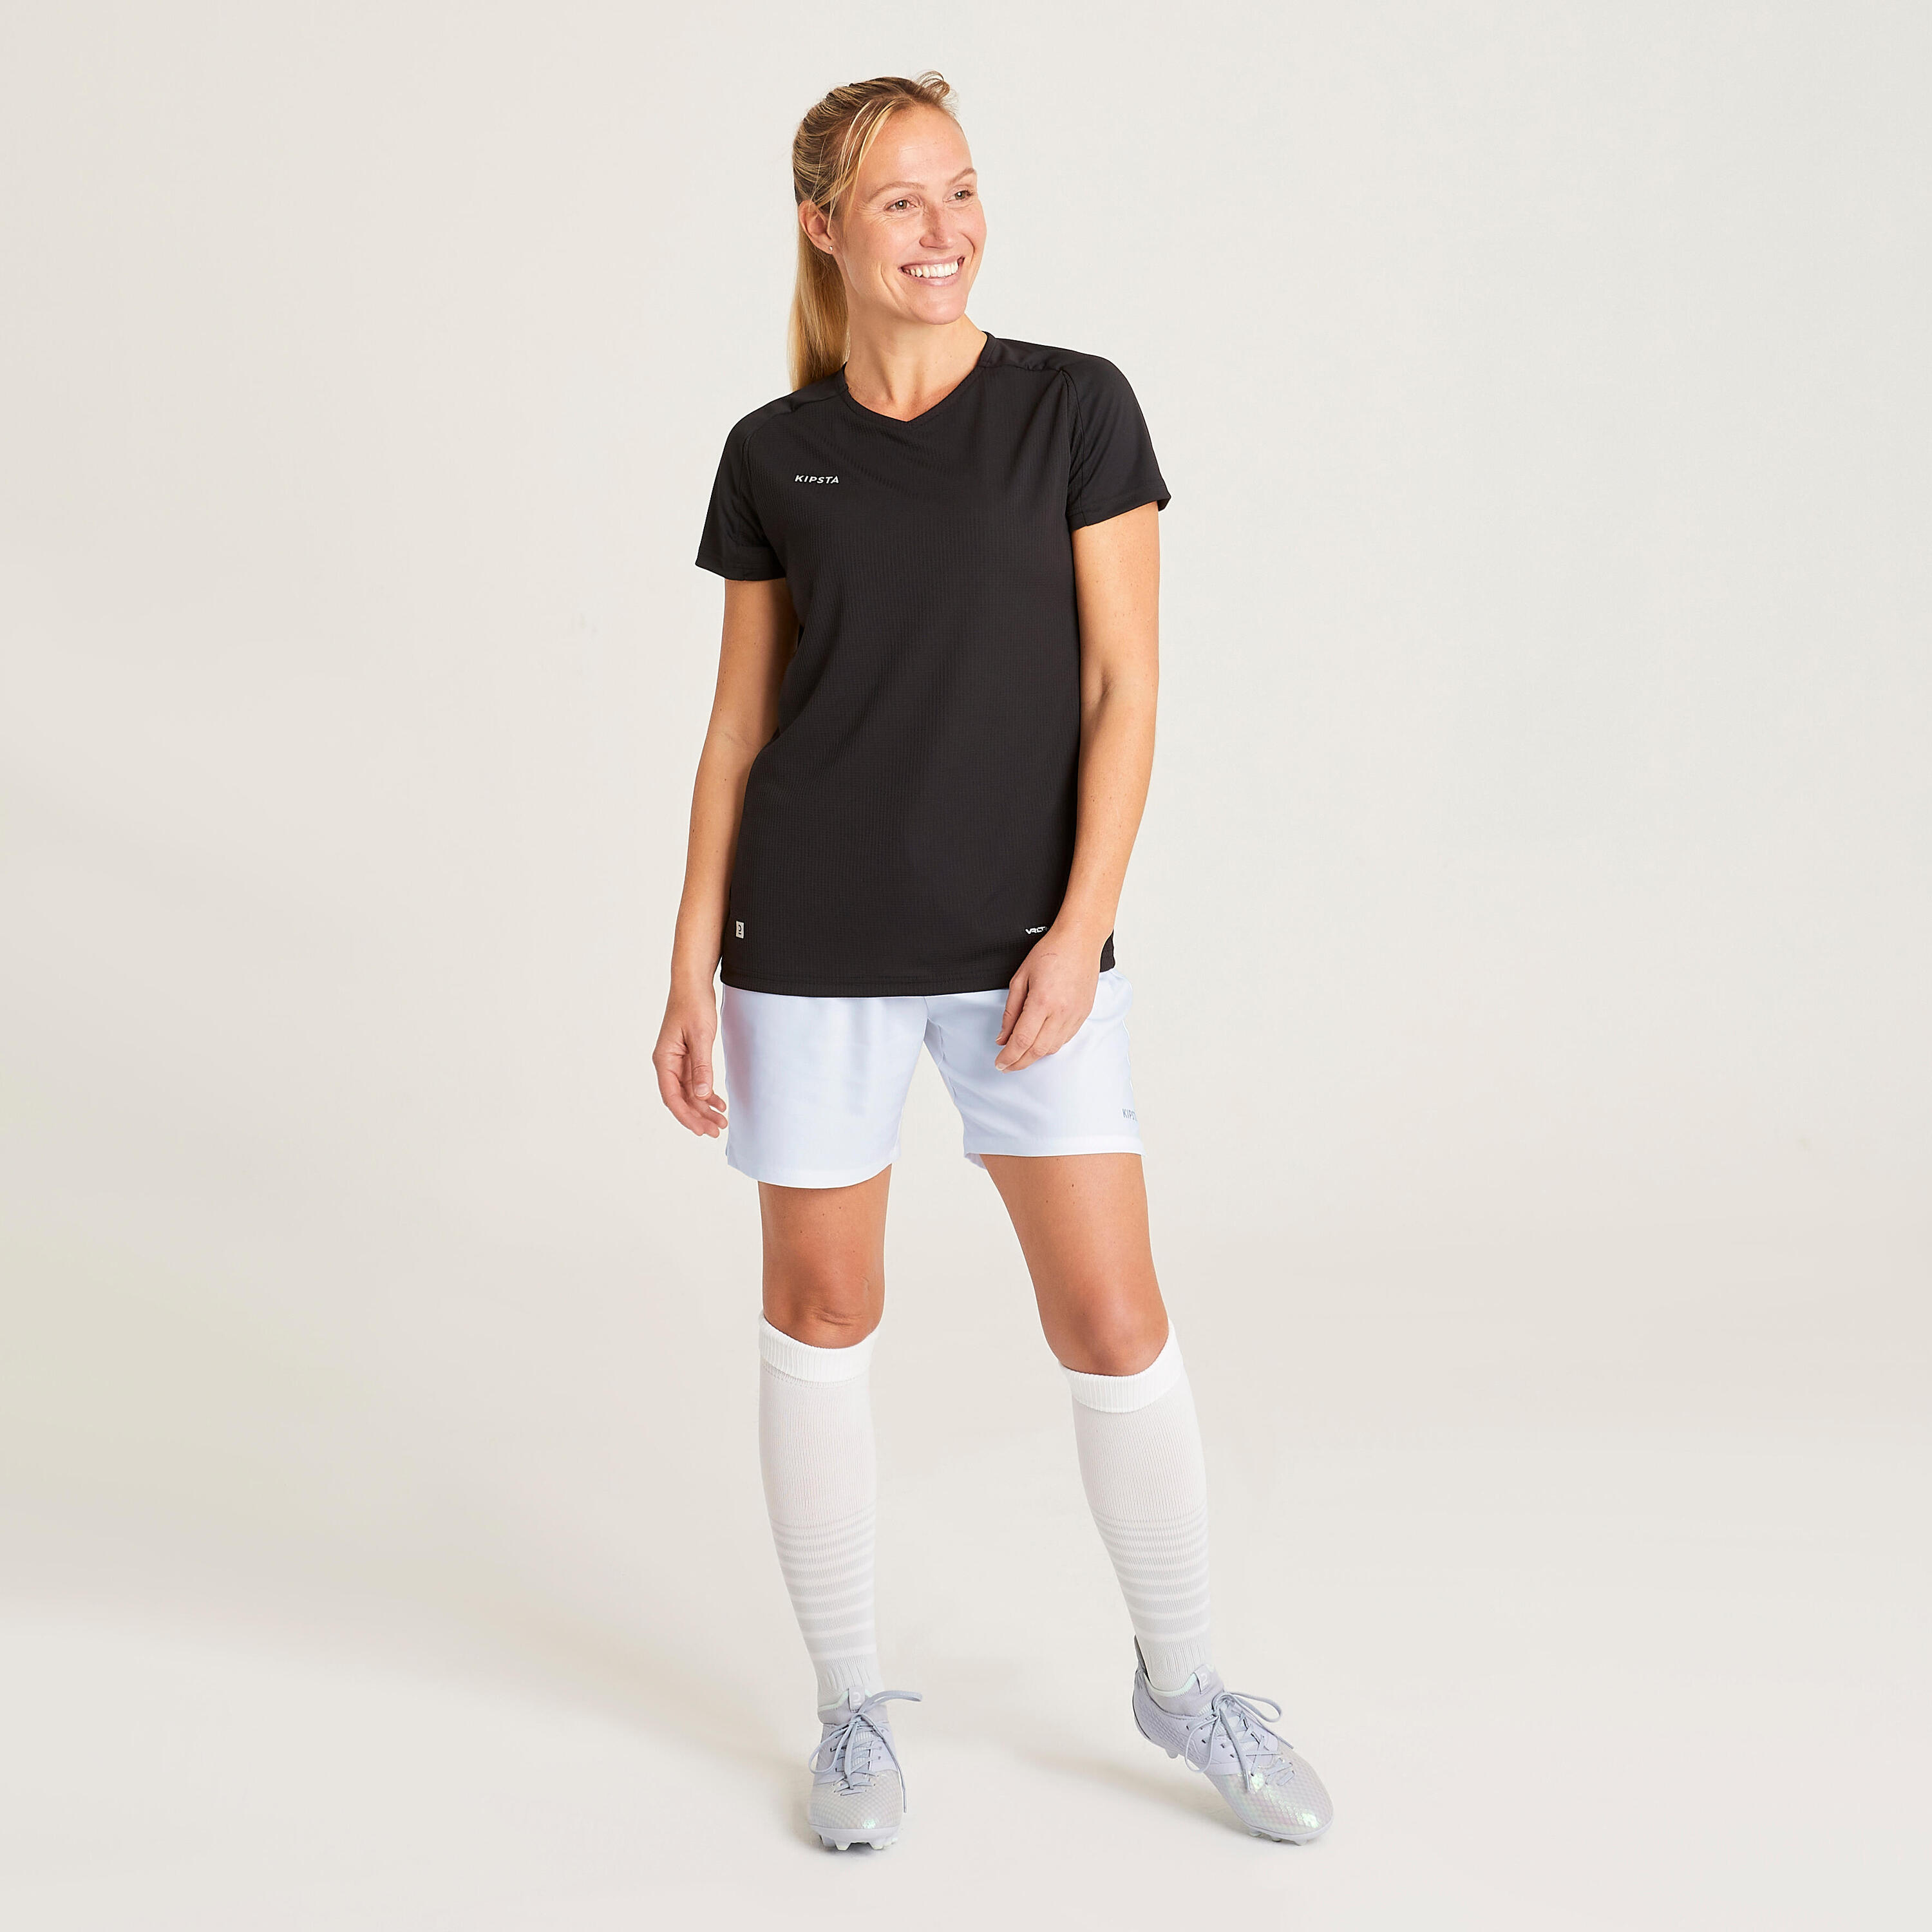 Women's Plain Football Shirt - Black 6/29